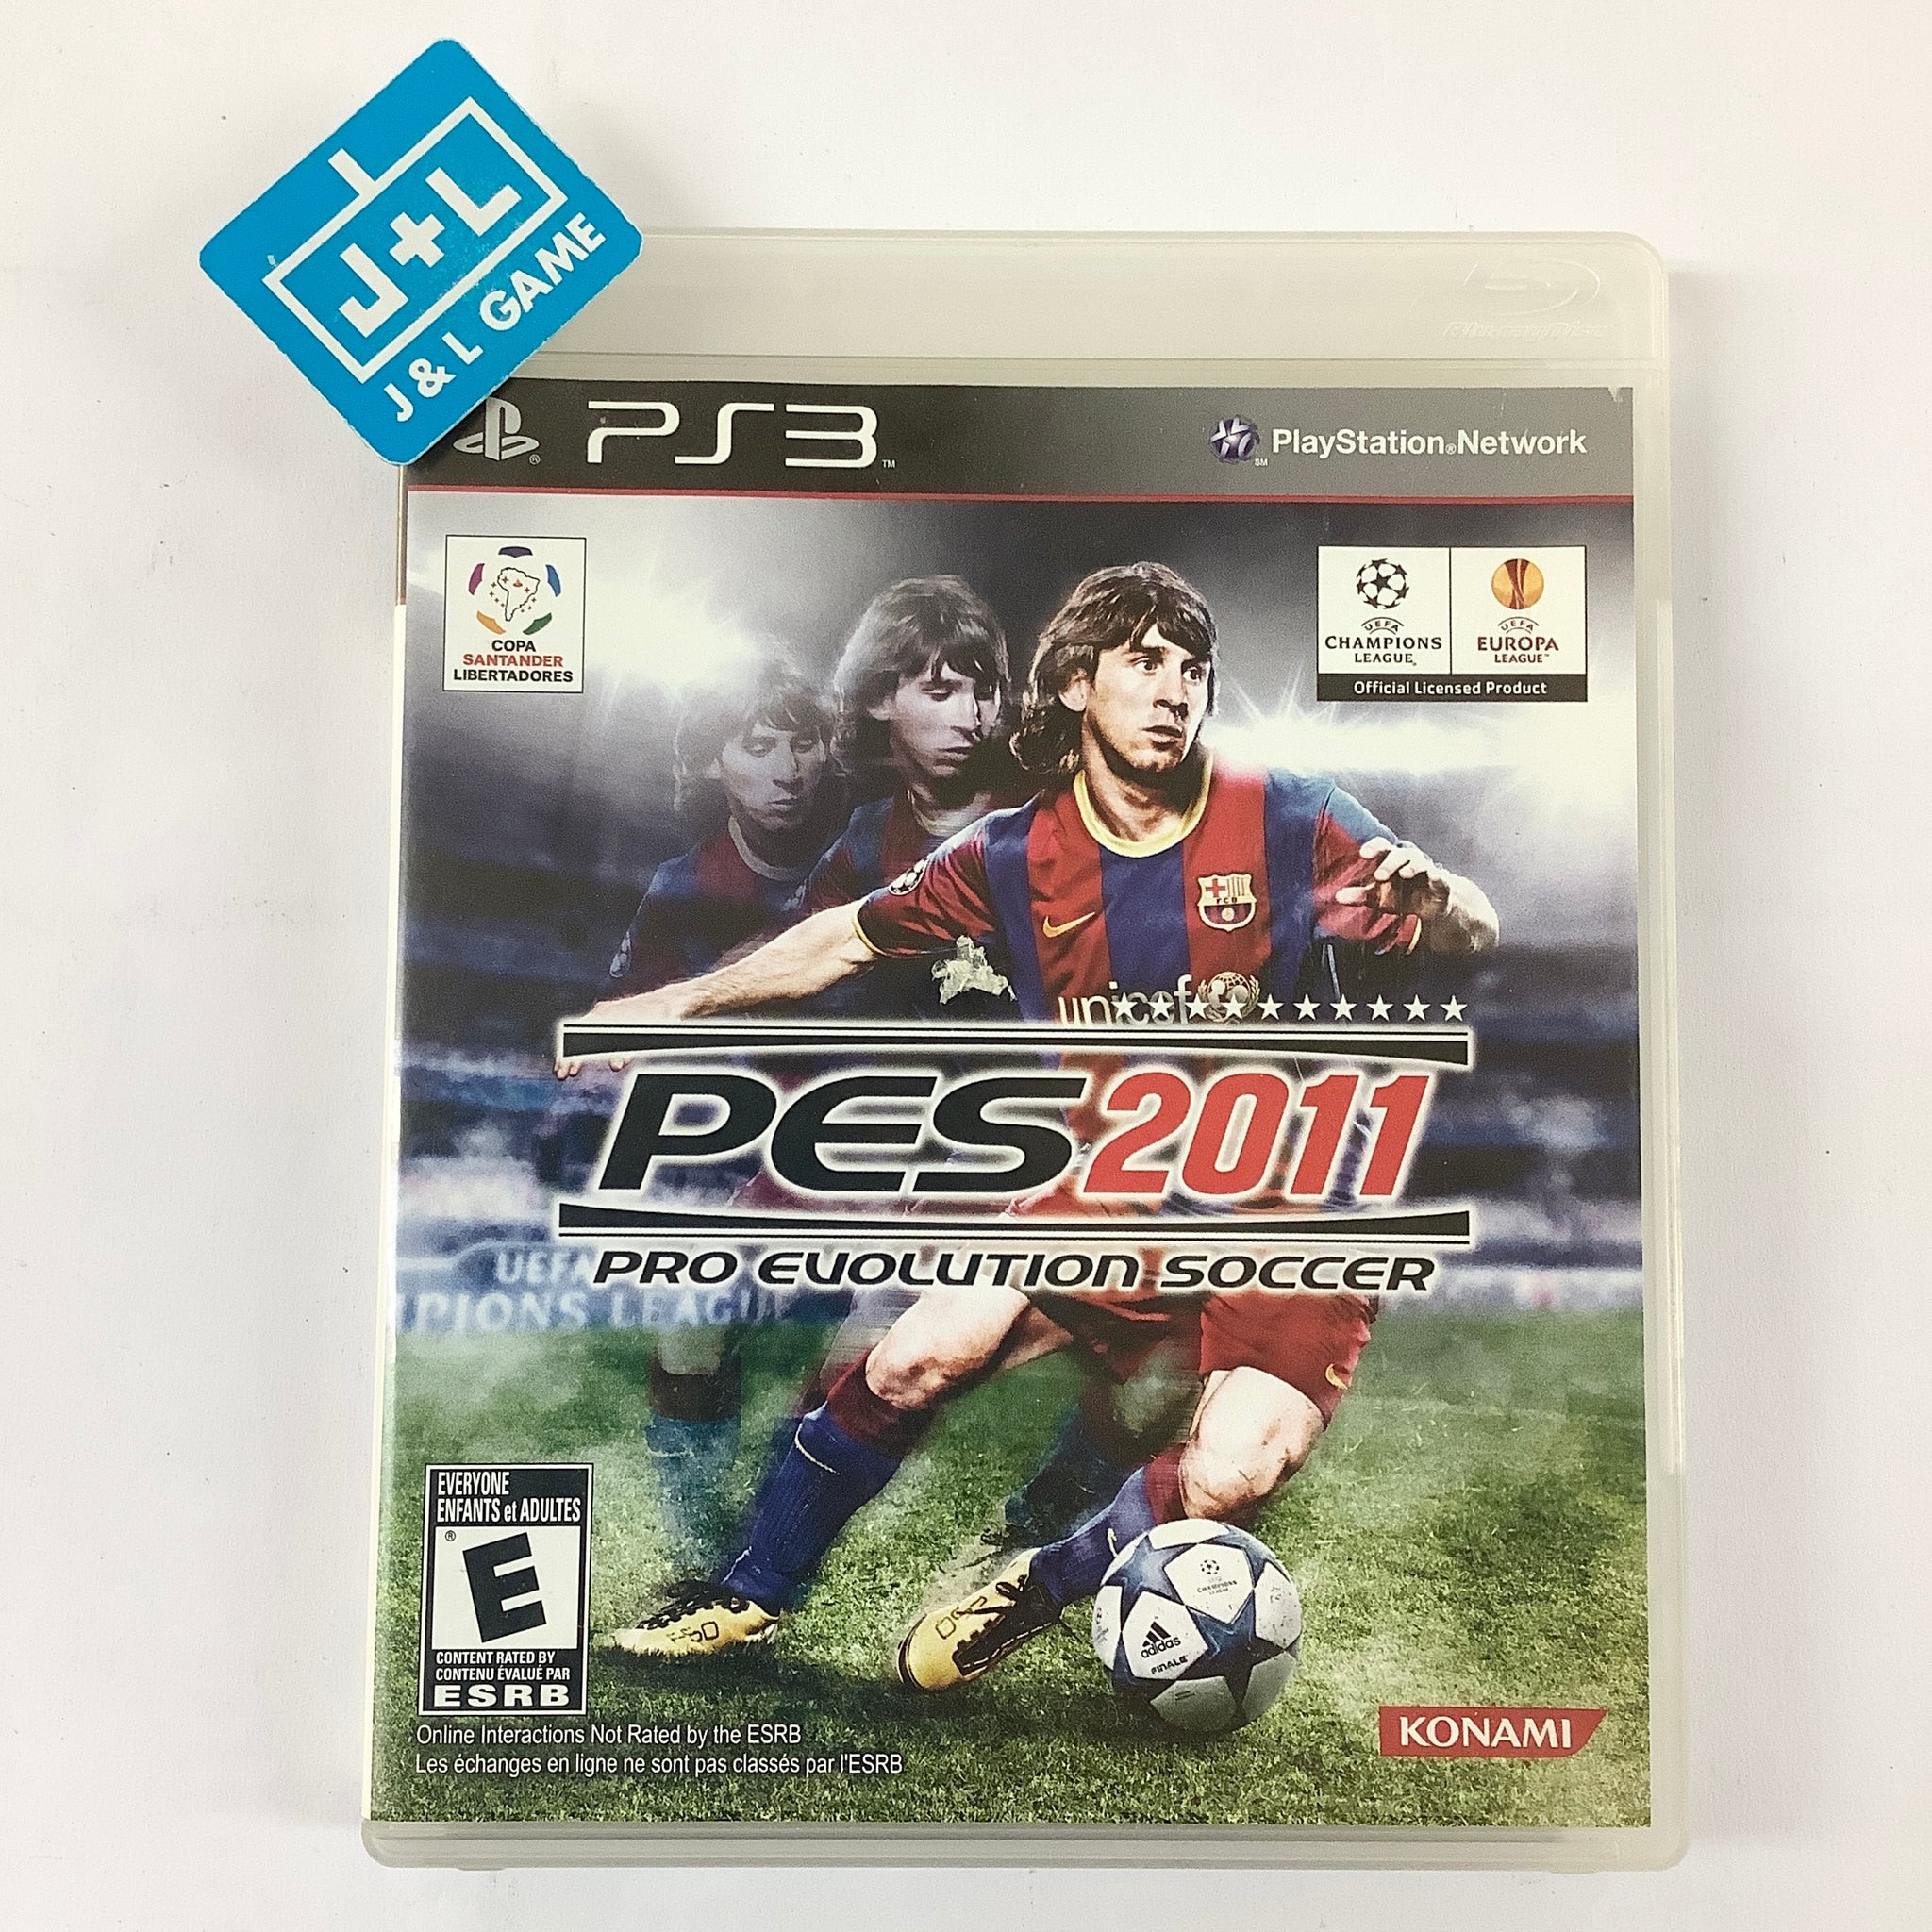 Pro Evolution Soccer 2013 - Playstation 3